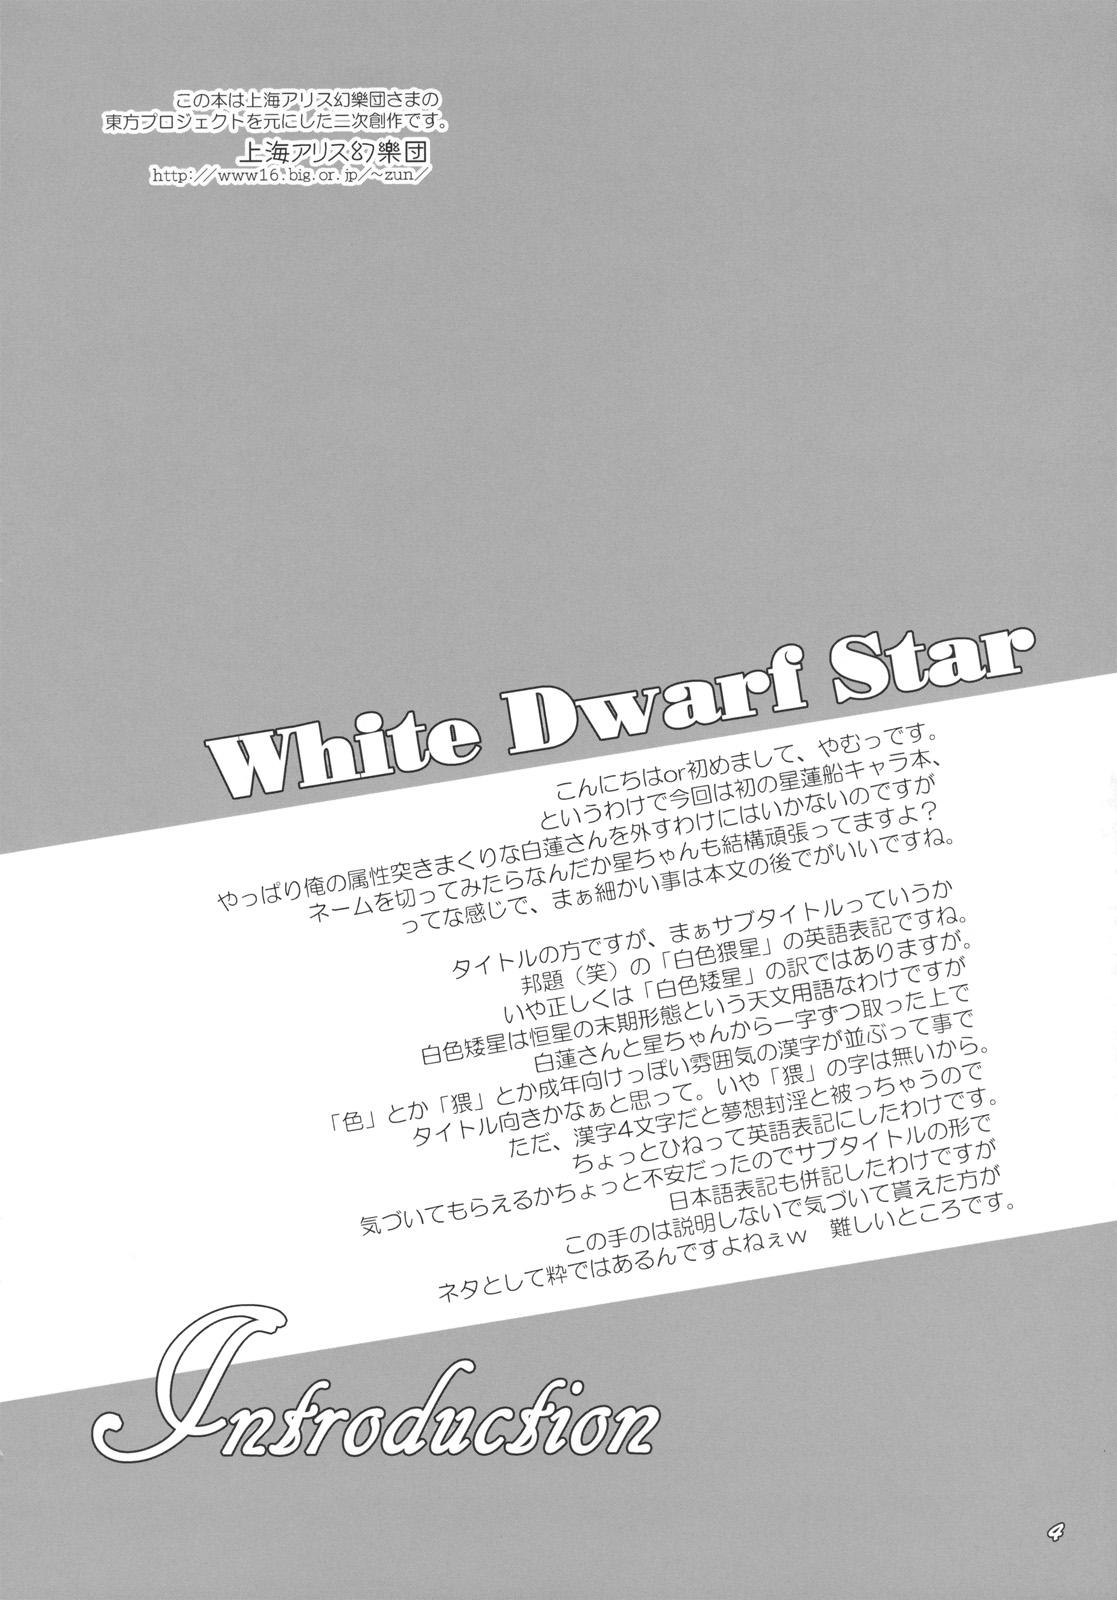 White Dwarf Star 3